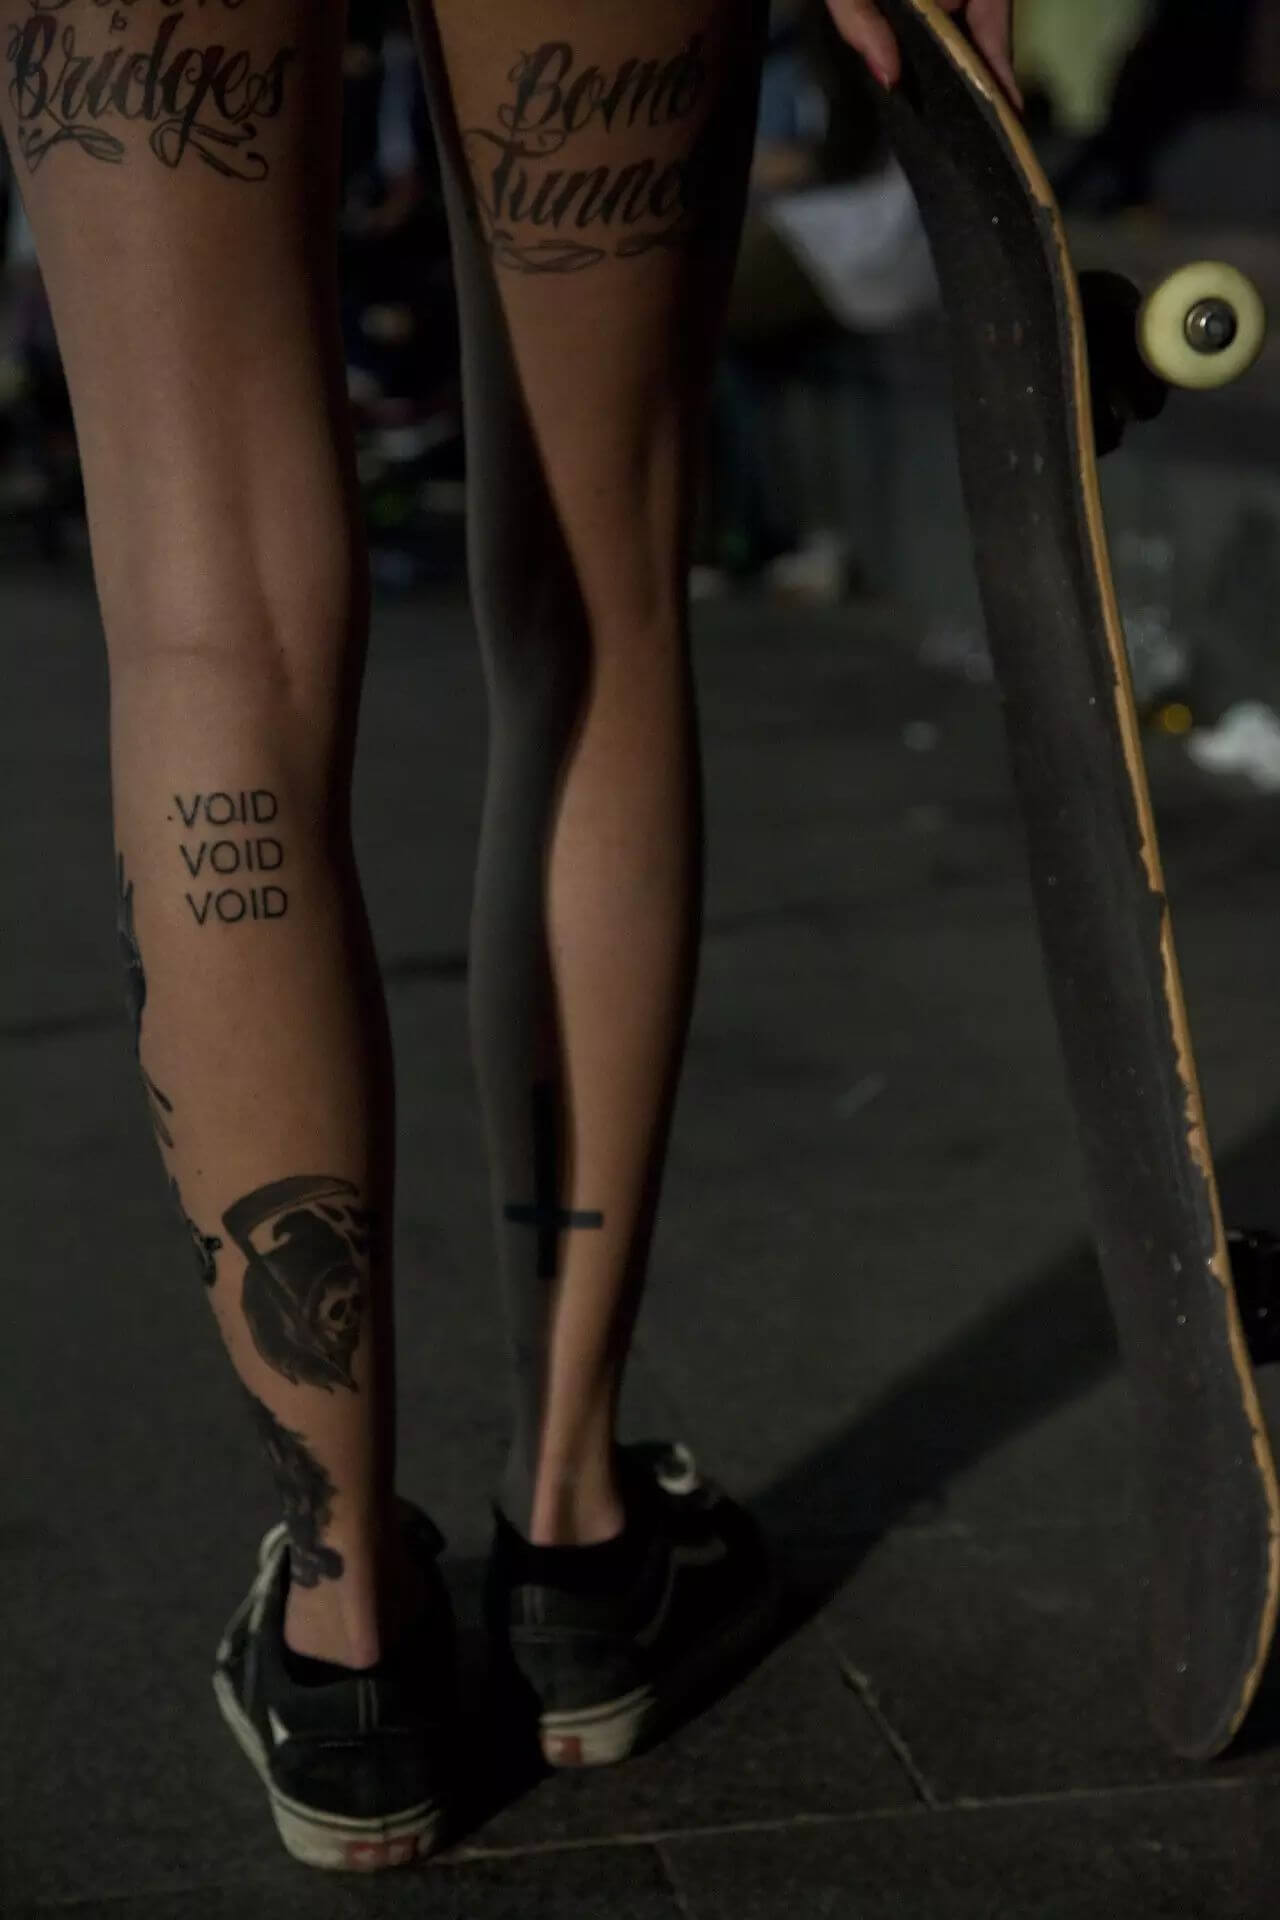 thigh tattoos